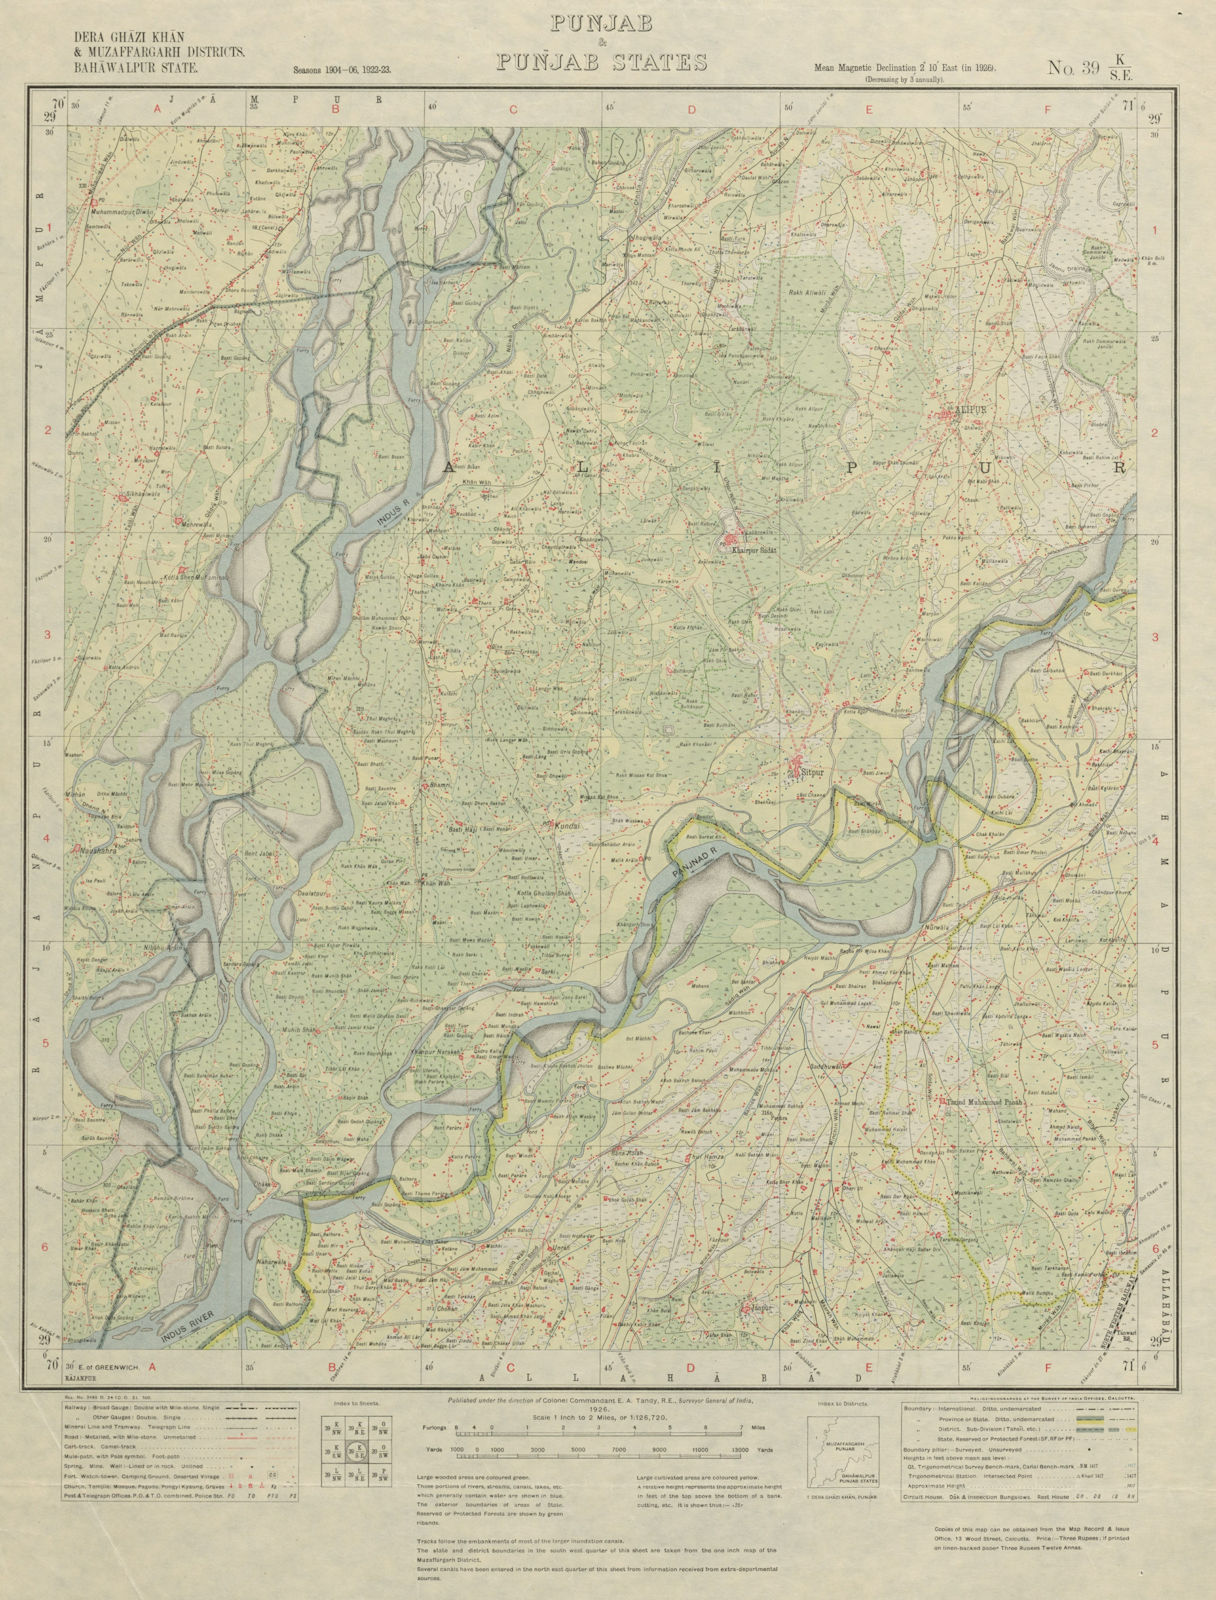 SURVEY OF INDIA 39 K/SE Pakistan Punjab Alipur Seetpur Janpur Indus 1926 map